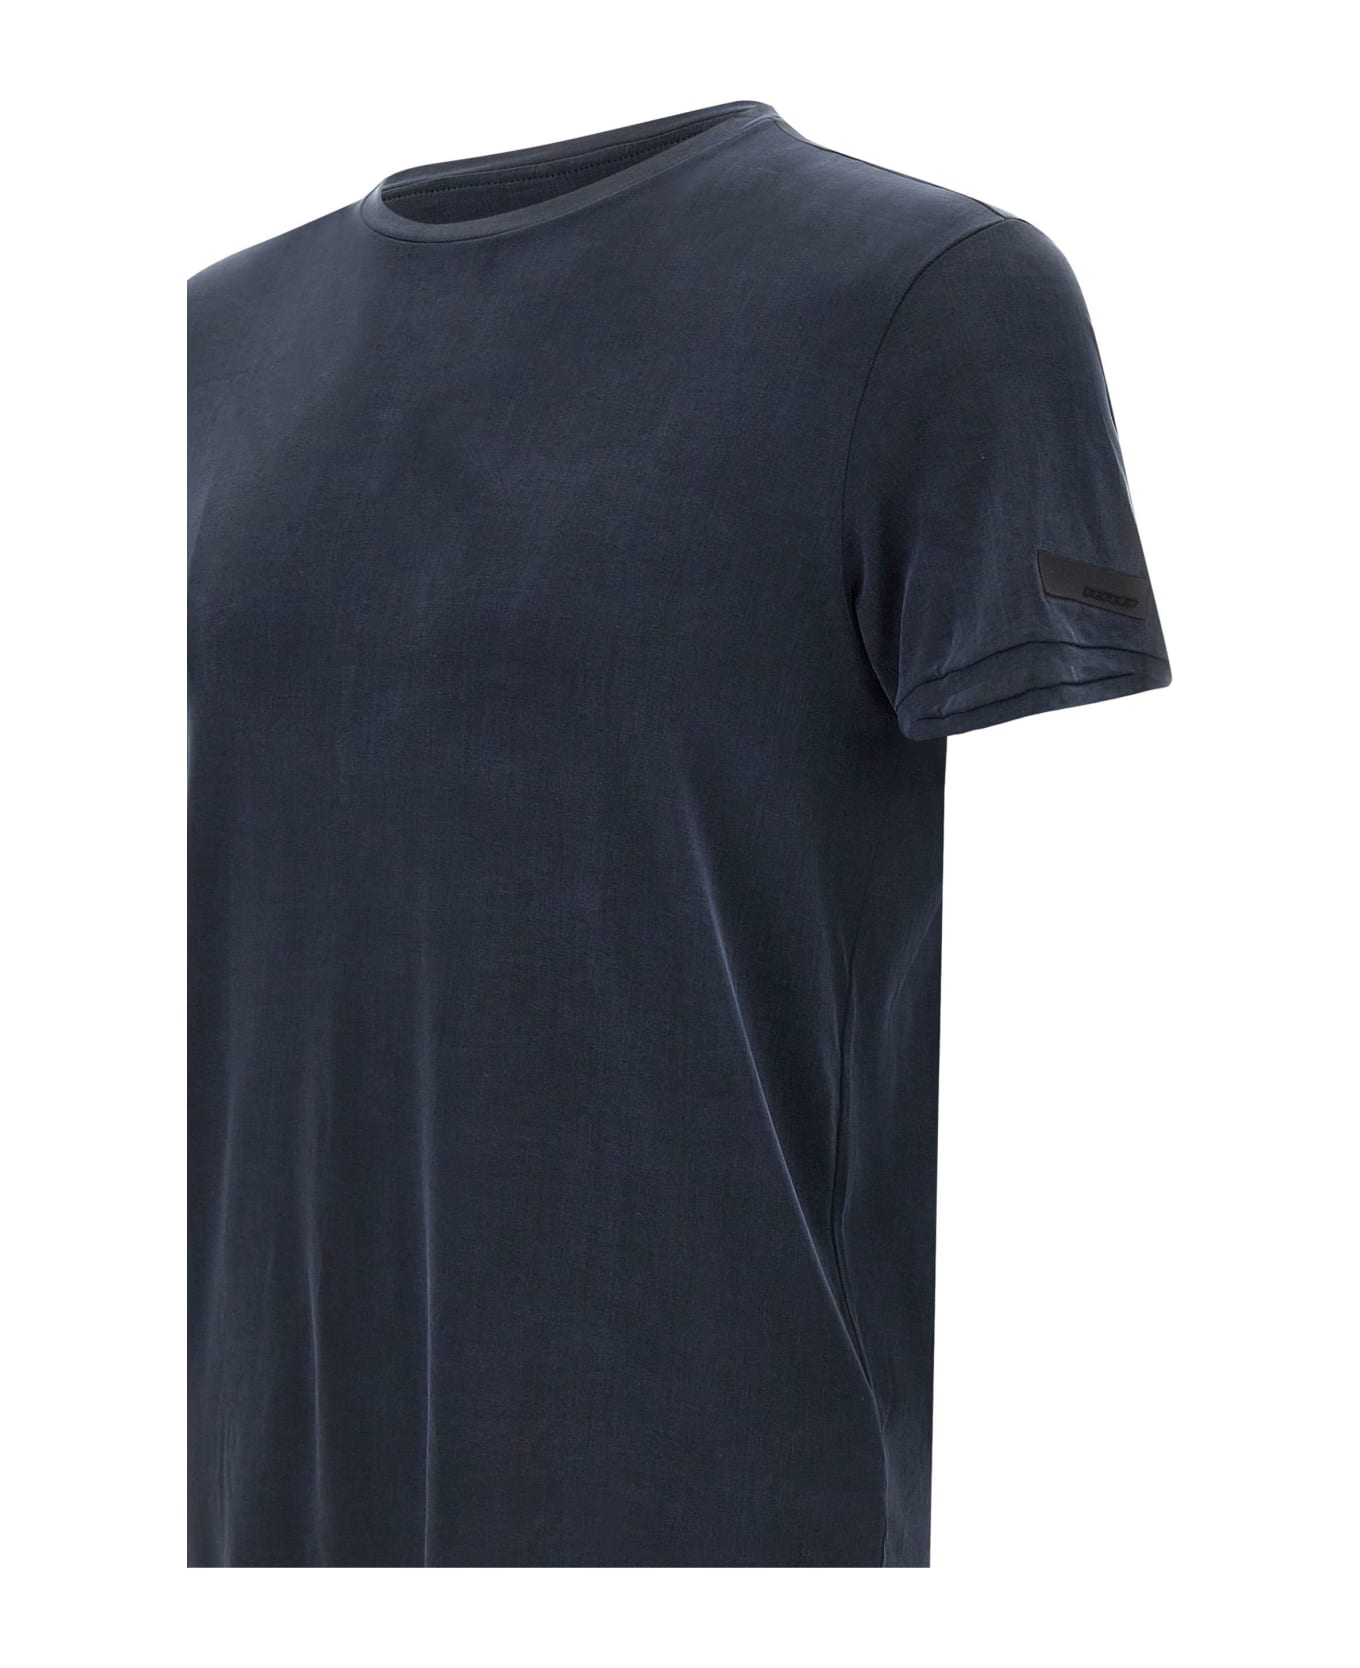 RRD - Roberto Ricci Design 'cupro Shirty' T-shirt - Nero